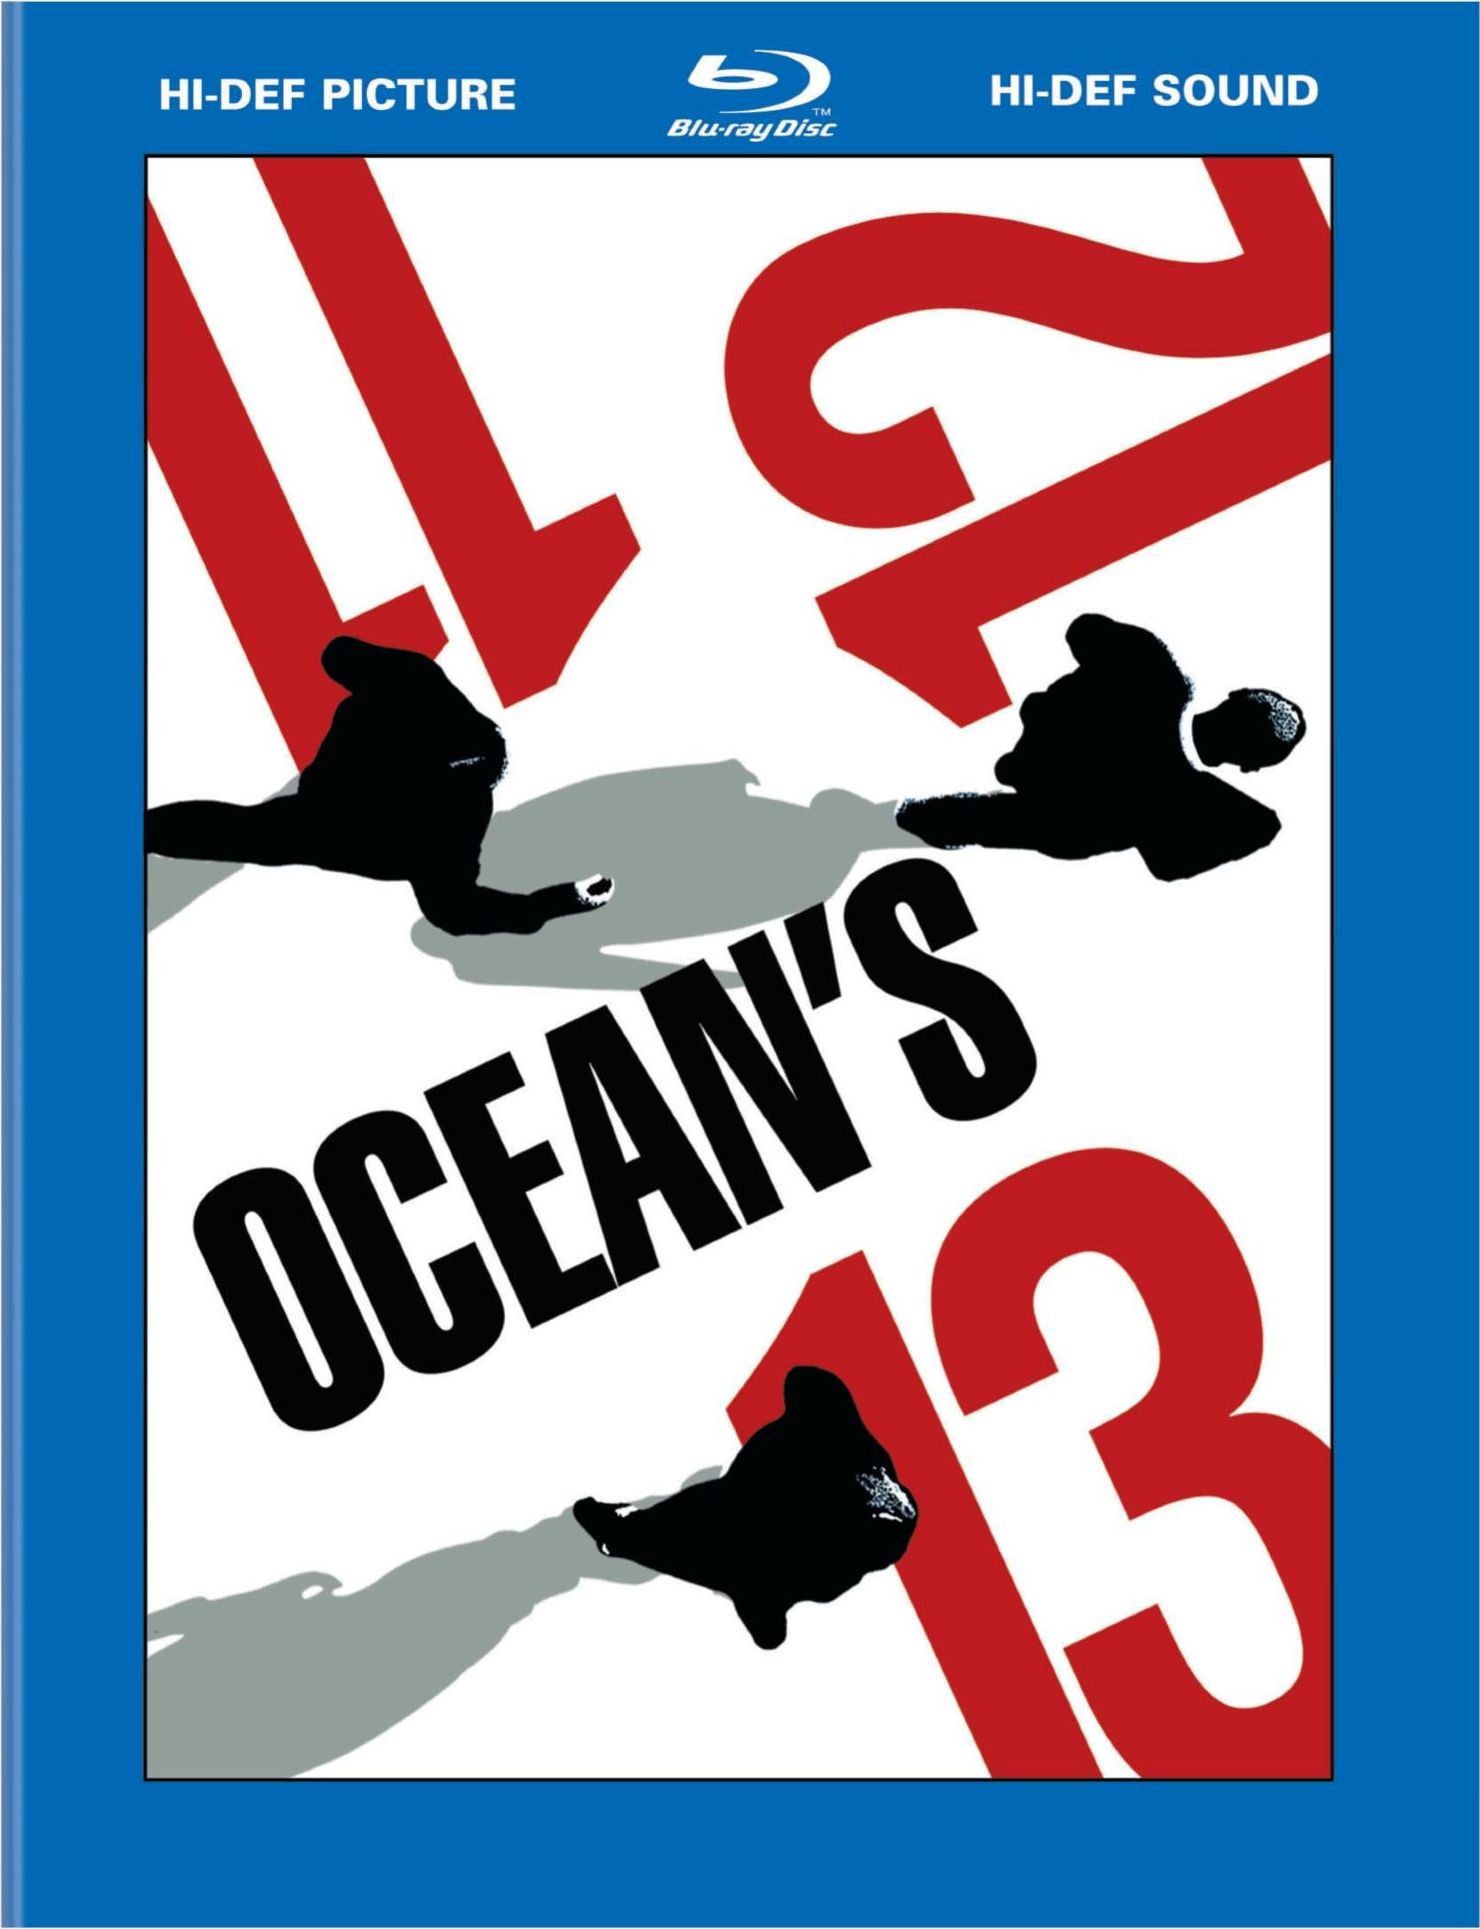 Oceans Eleven Blu-ray